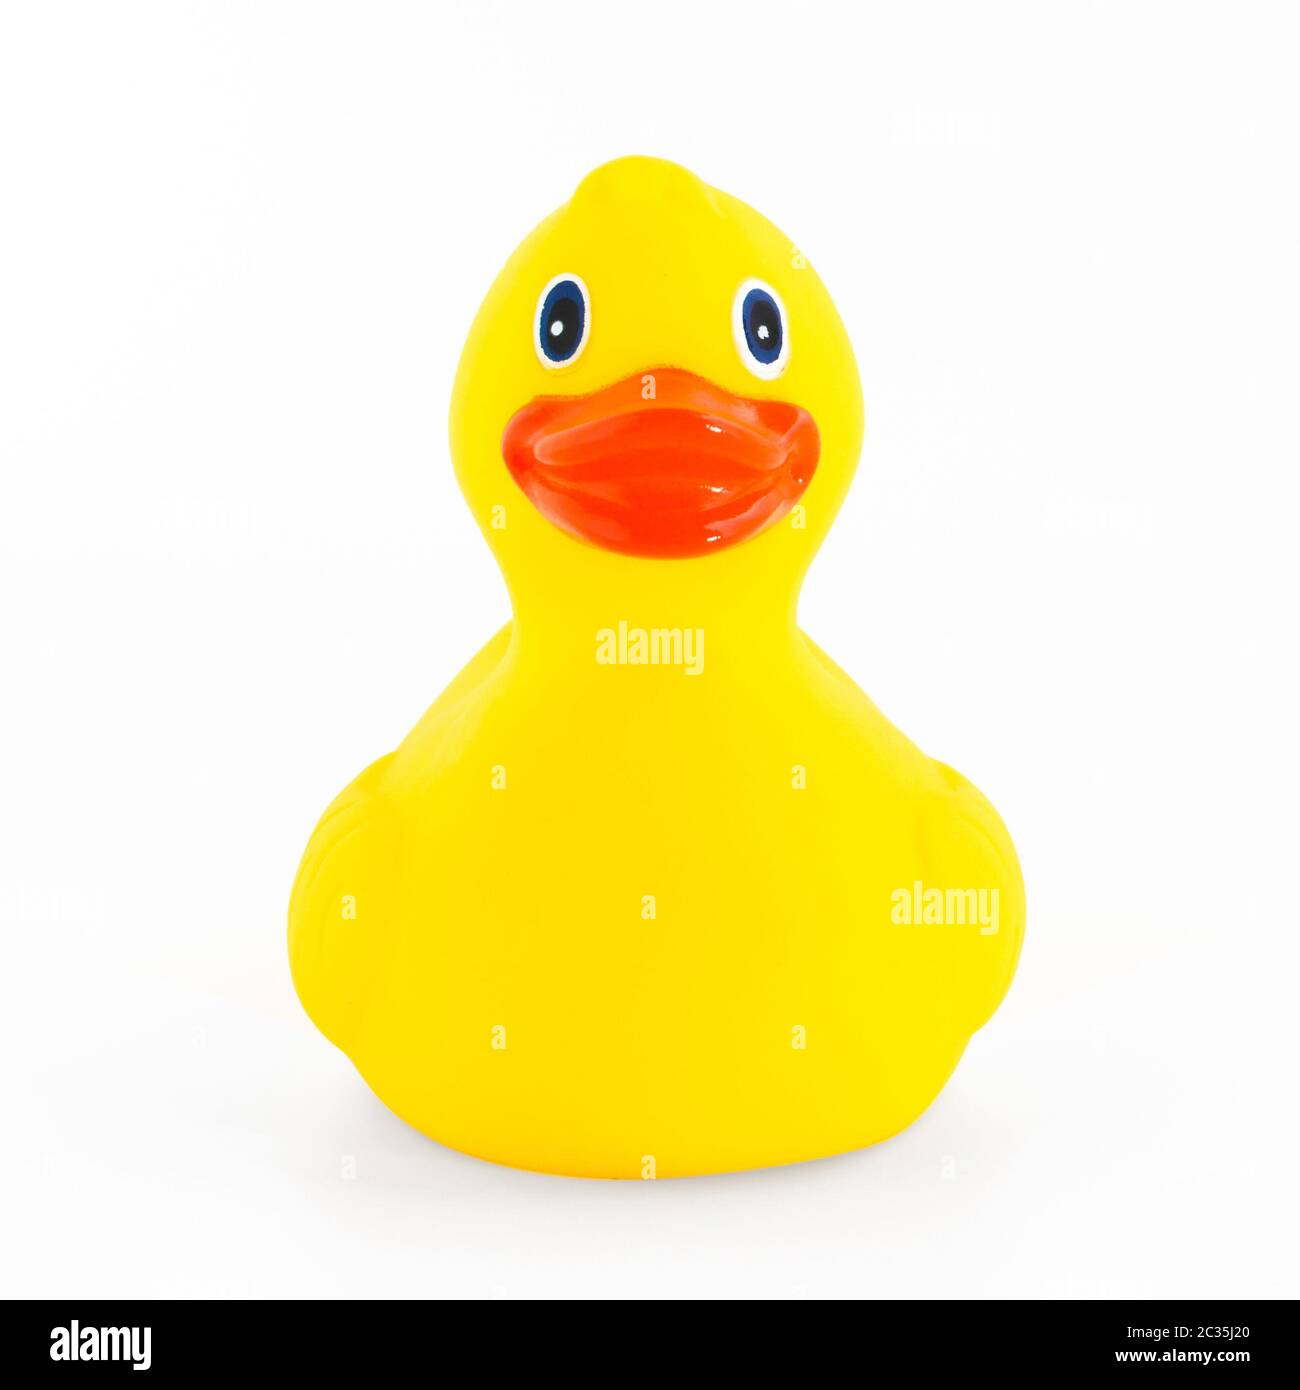 Yellow rubber duck Stock Photo